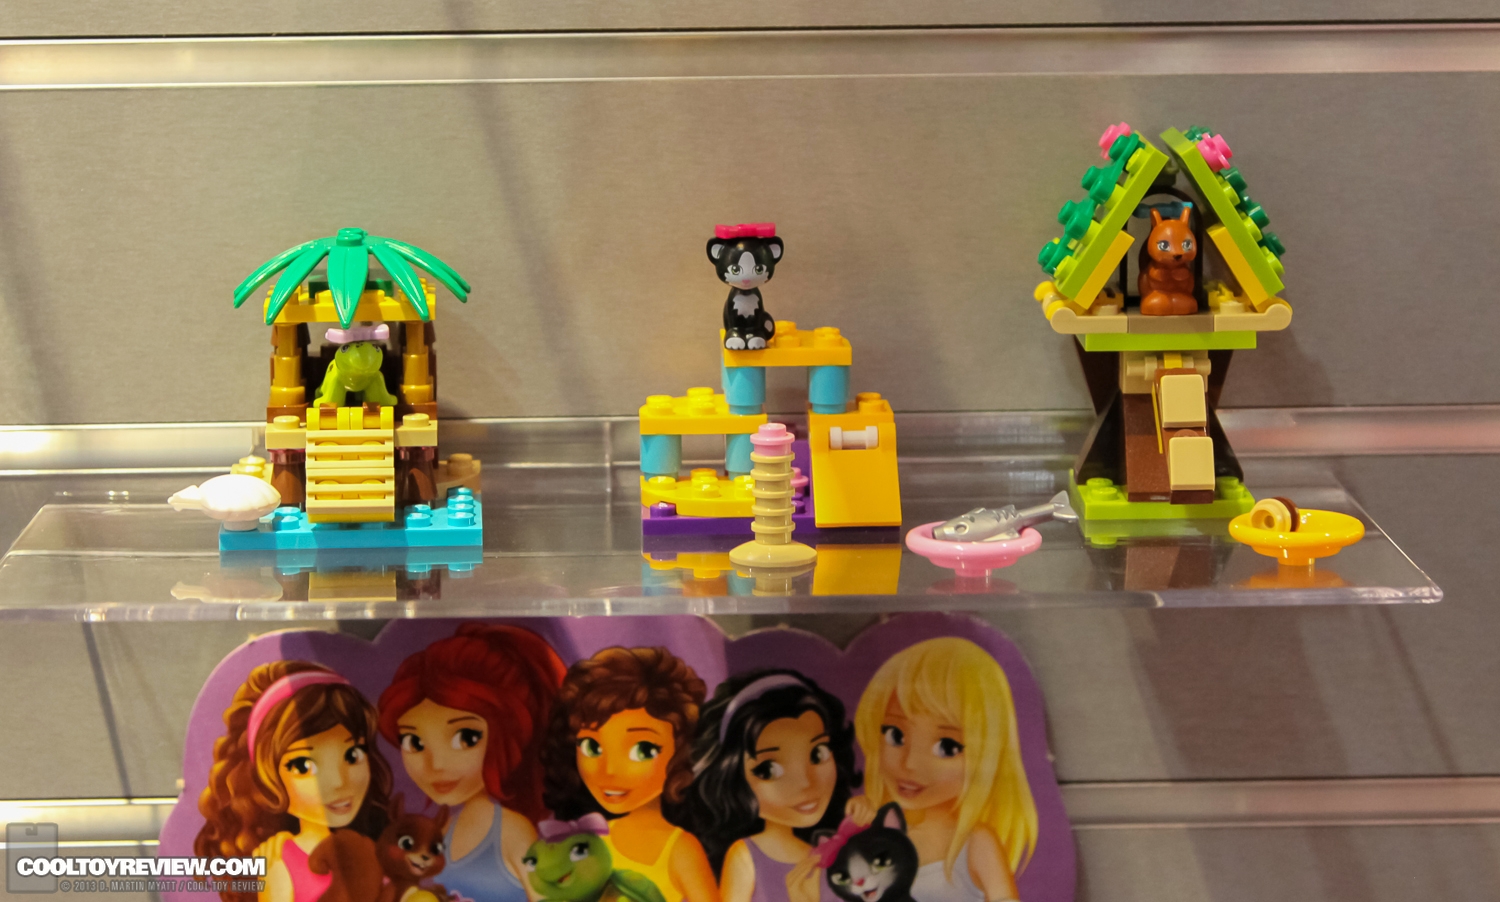 Hasbro_2013_International_Toy_Fair_LEGO-217.jpg